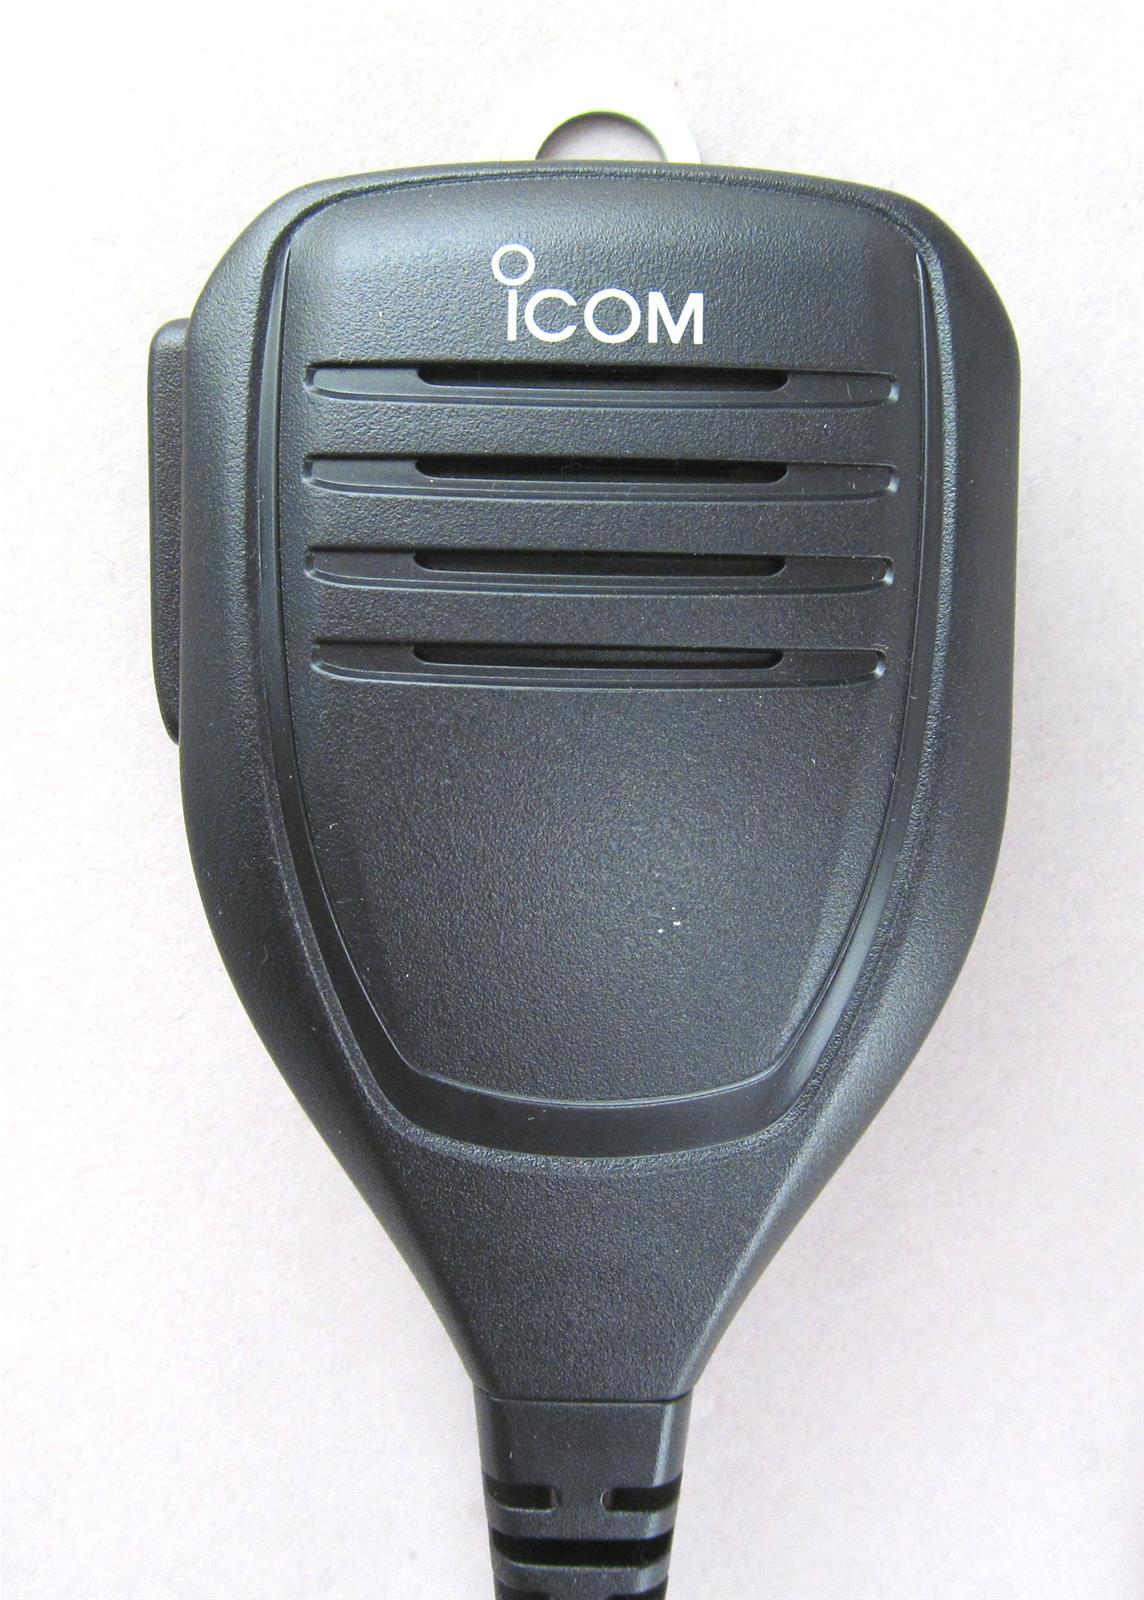 Icom HM-219 Hand Microphone for IC-7300 S2